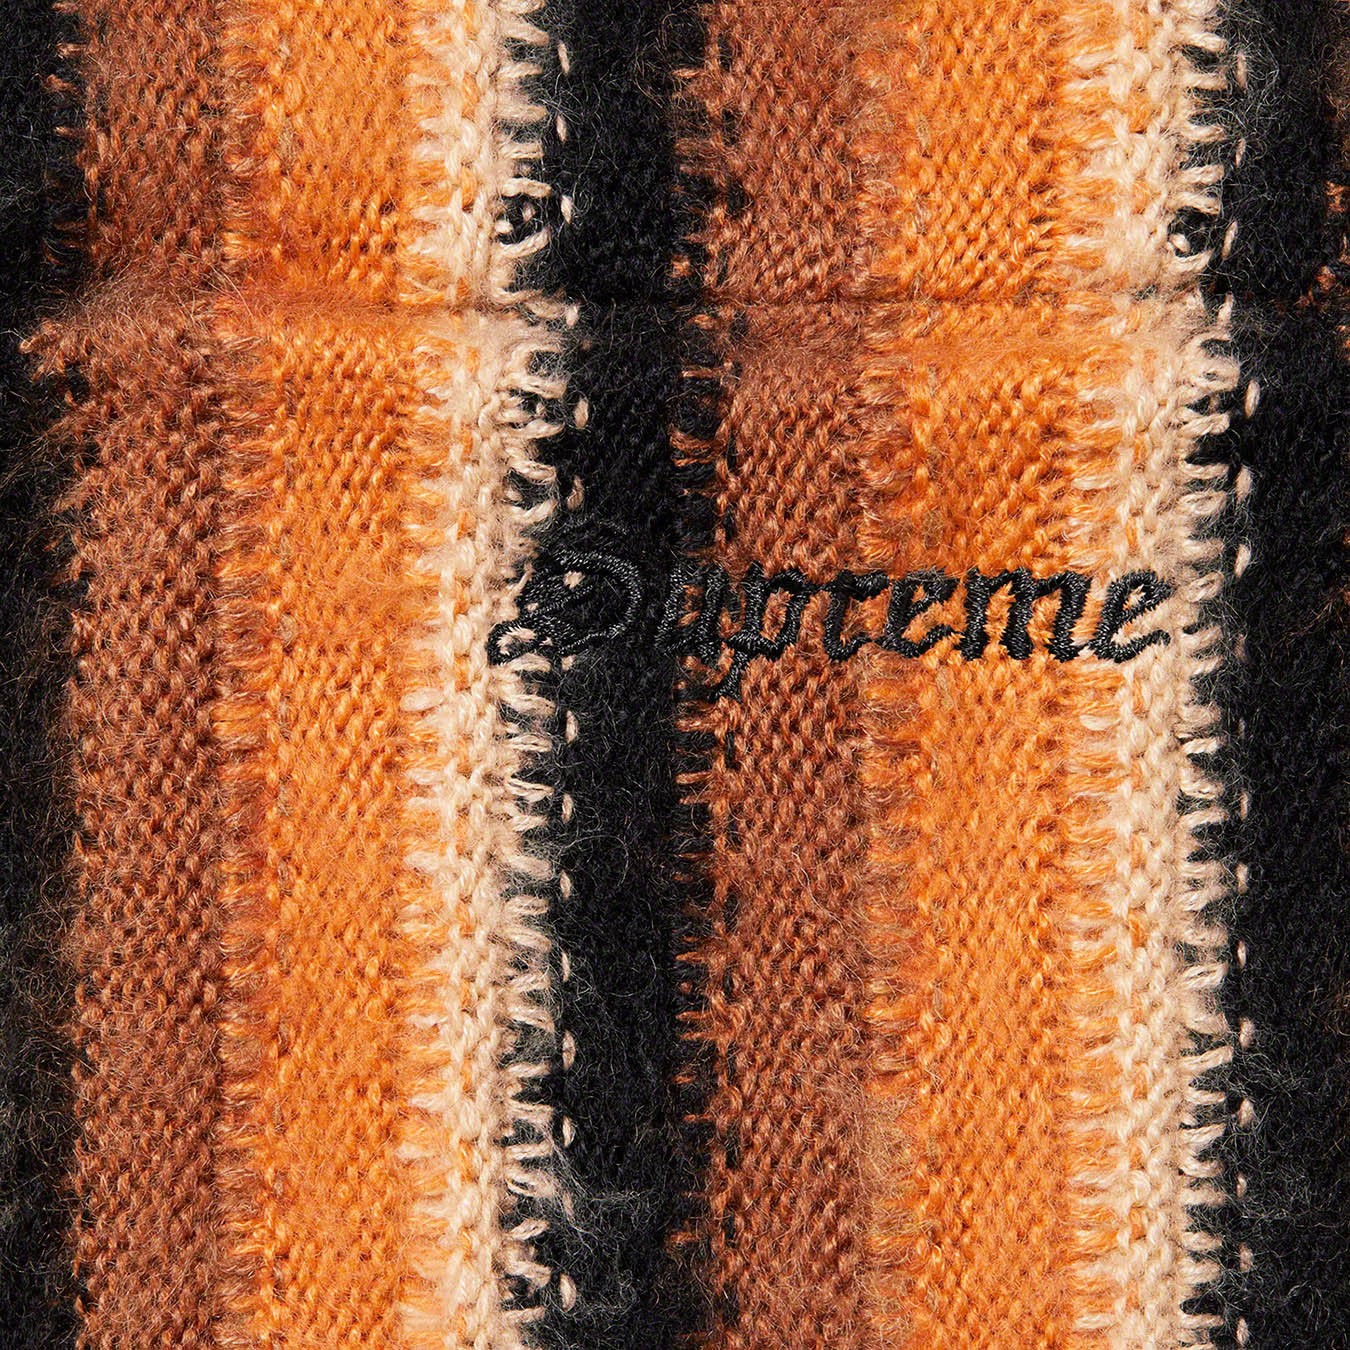 Stripe Sweater Vest | Supreme 21ss